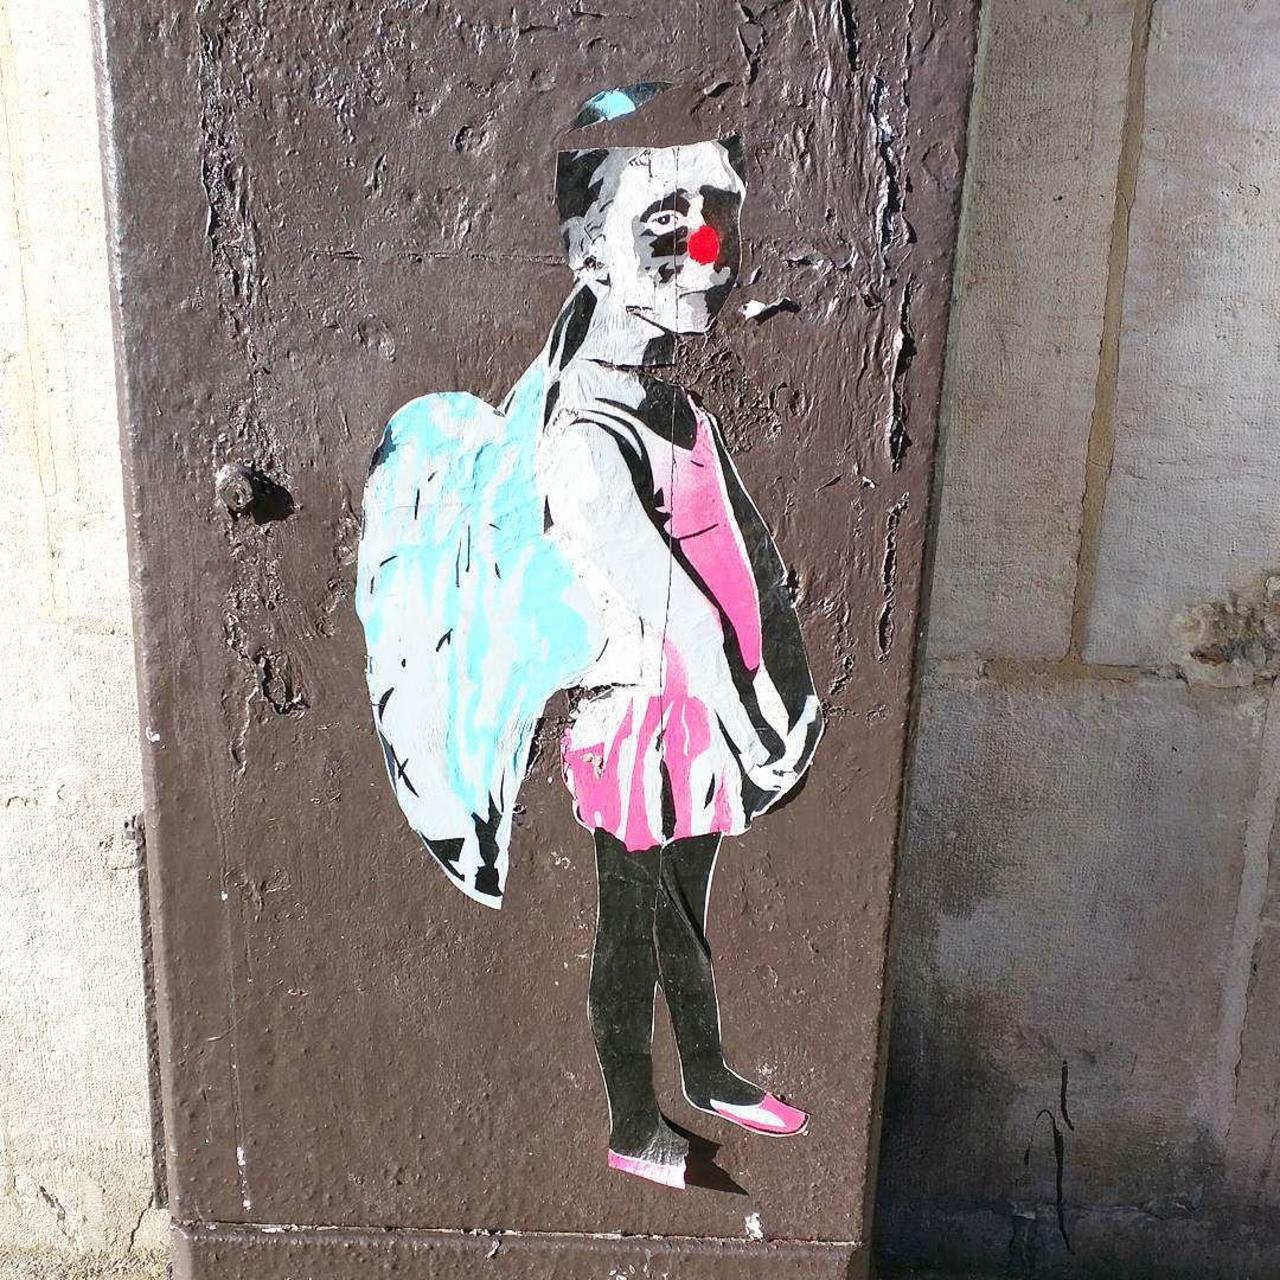 circumjacent_fr: #Paris #graffiti photo by alphaquadra http://ift.tt/1jDkGvJ #StreetArt http://t.co/Q15pgYJshv